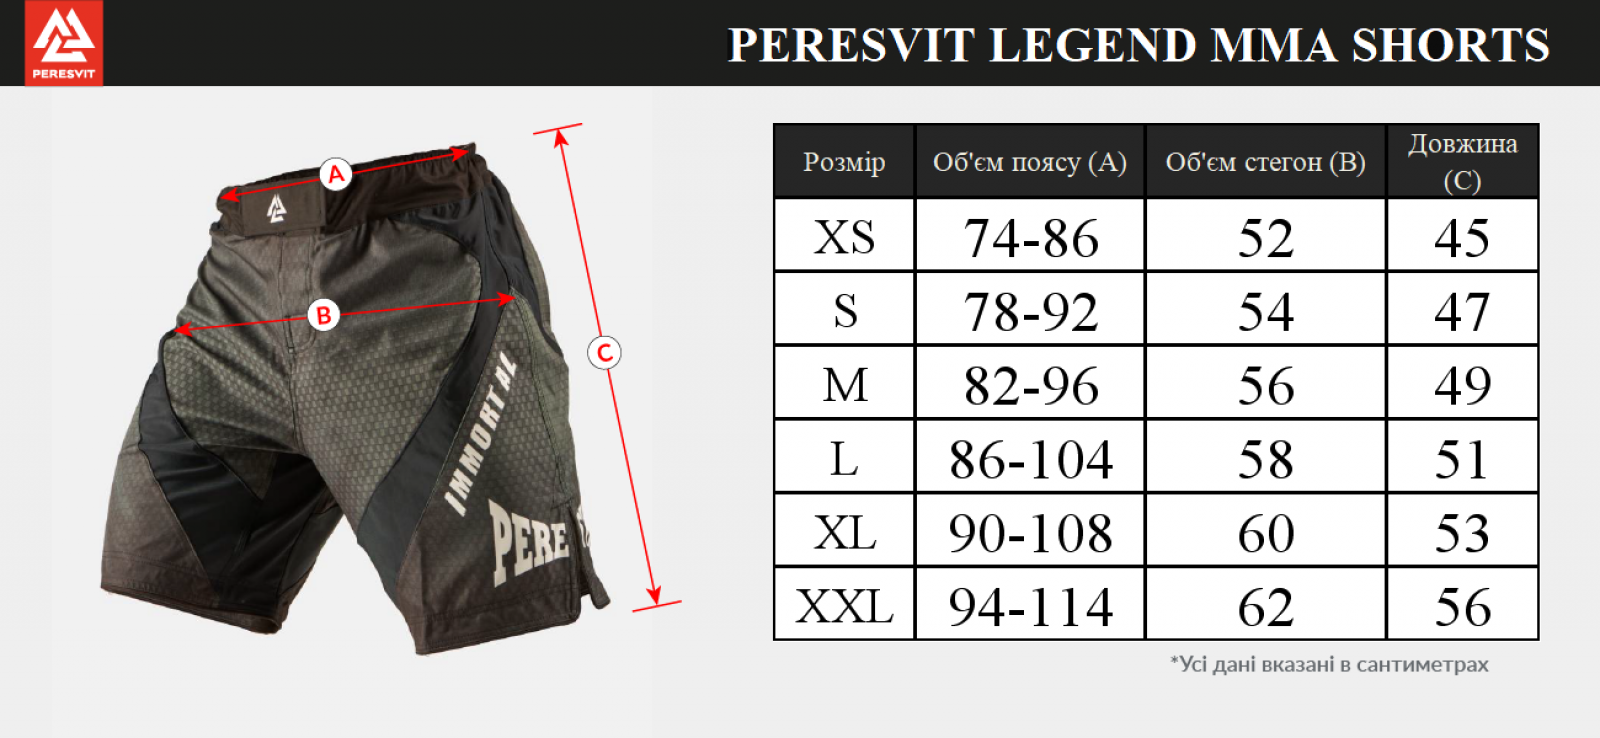 Шорты Peresvit Grunge Camo Legend Fight Shorts Размер: XS